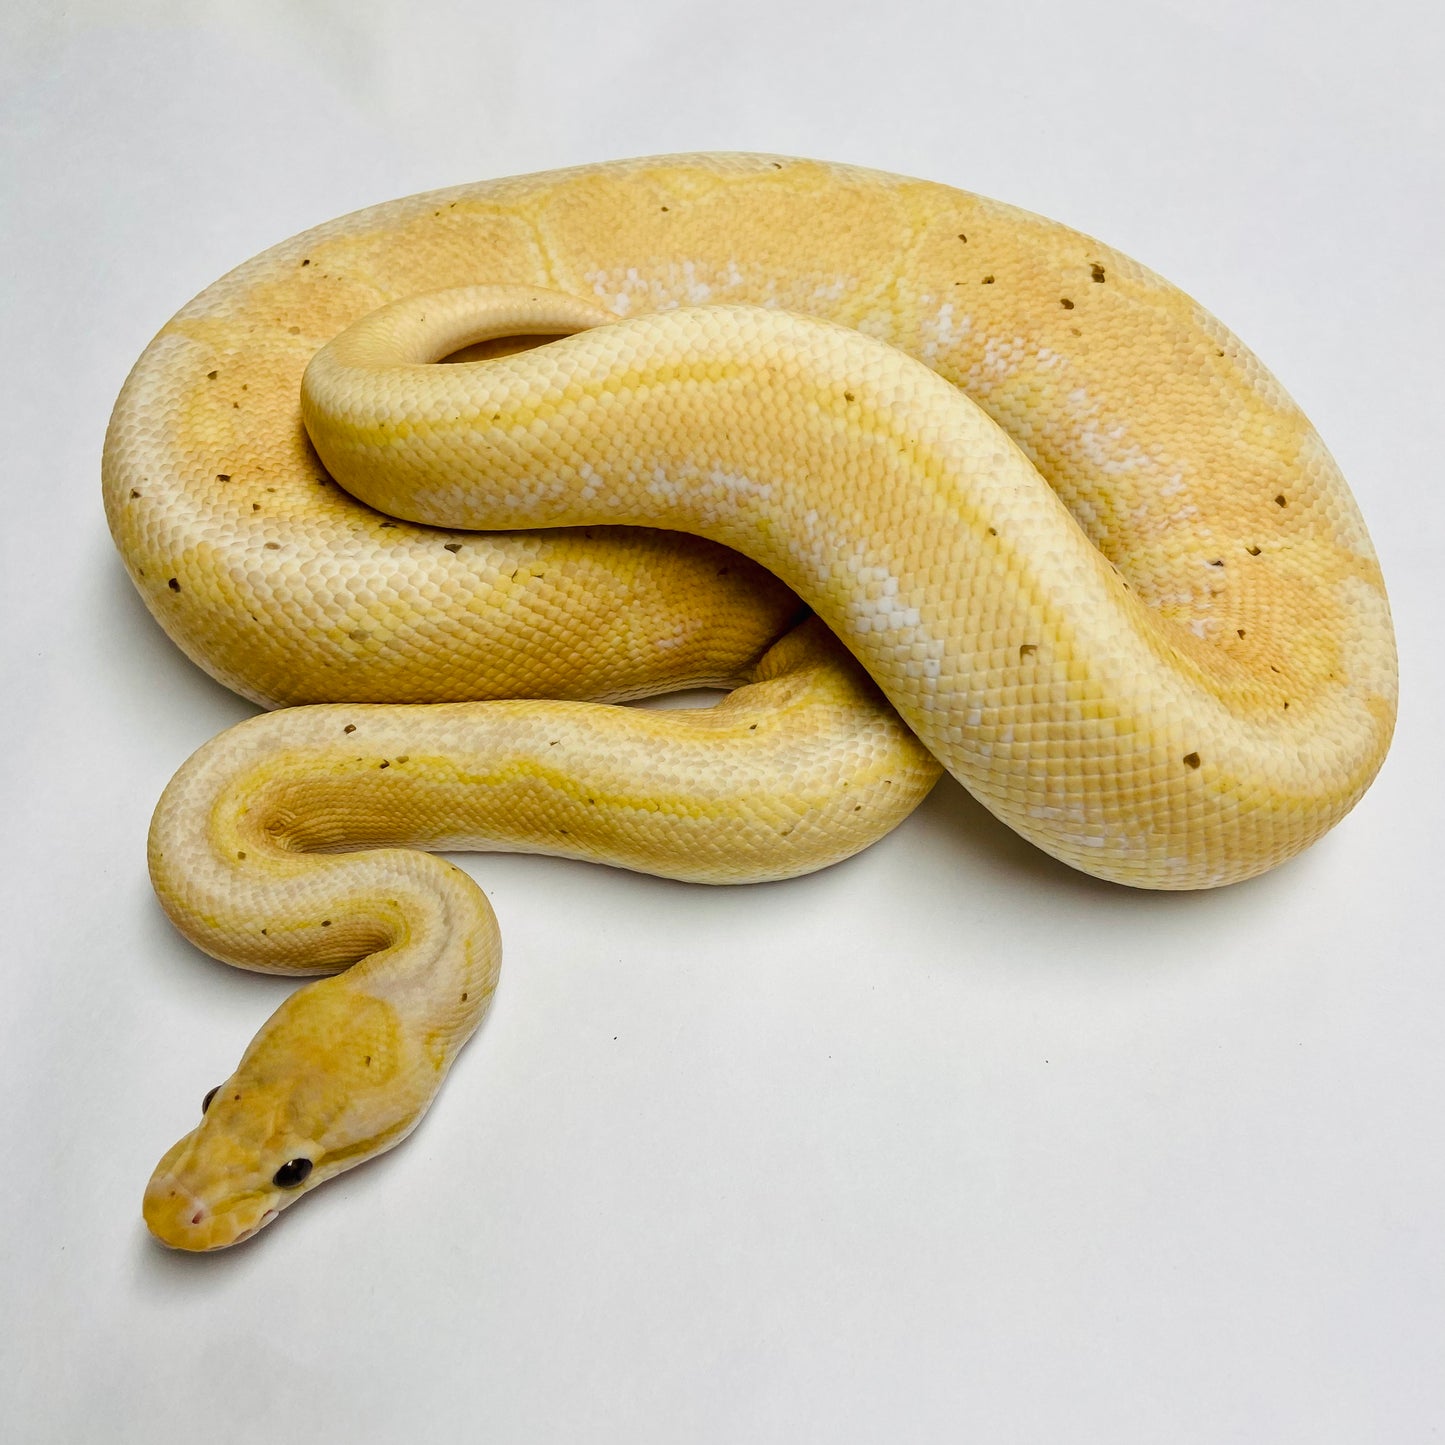 Adult Banana Cinnamon Enchi Pinstripe Ball Python- Male